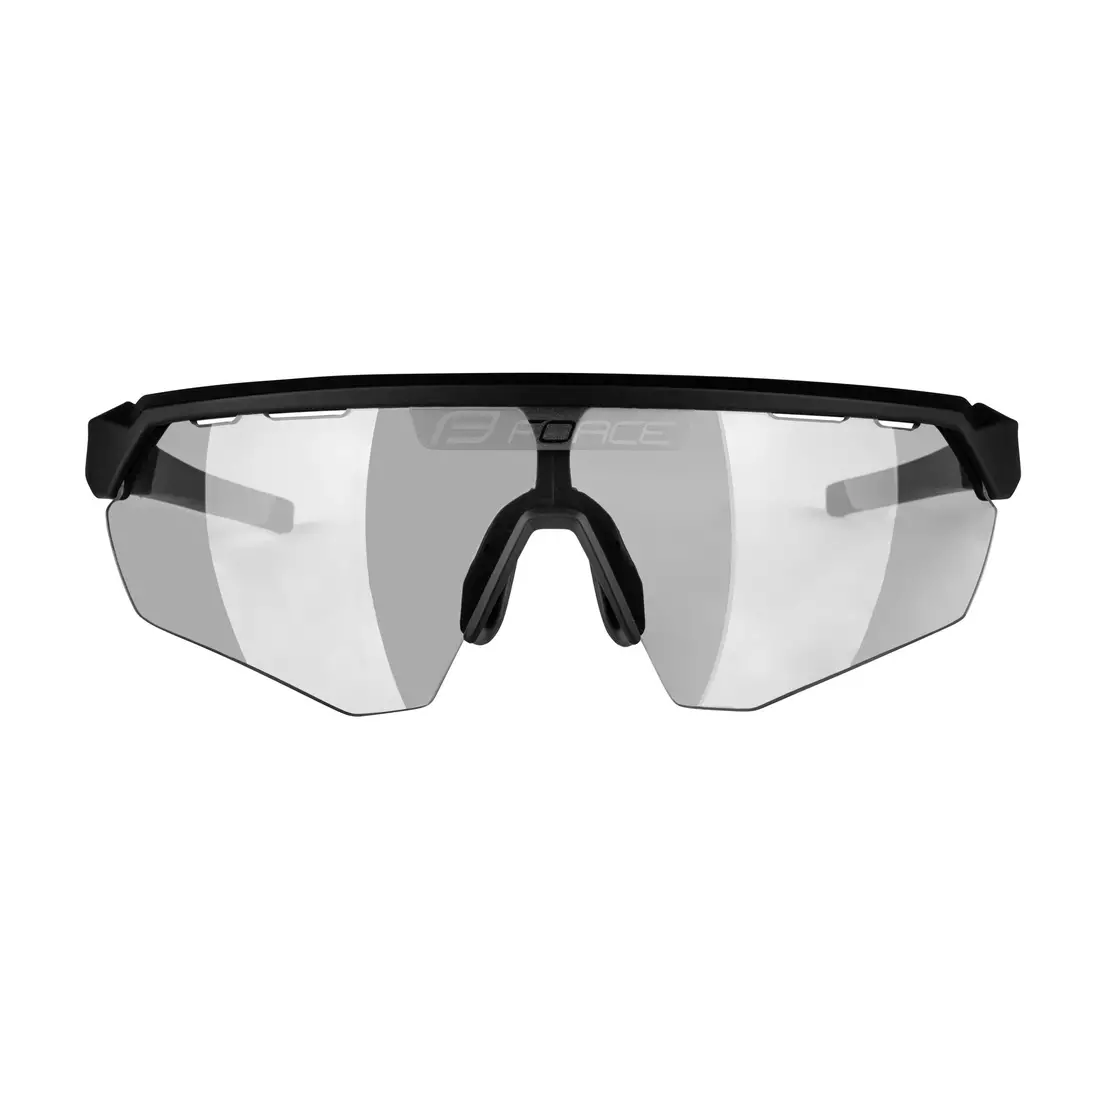 FORCE fotochromatické brýle ENIGMA blach/grey 91161